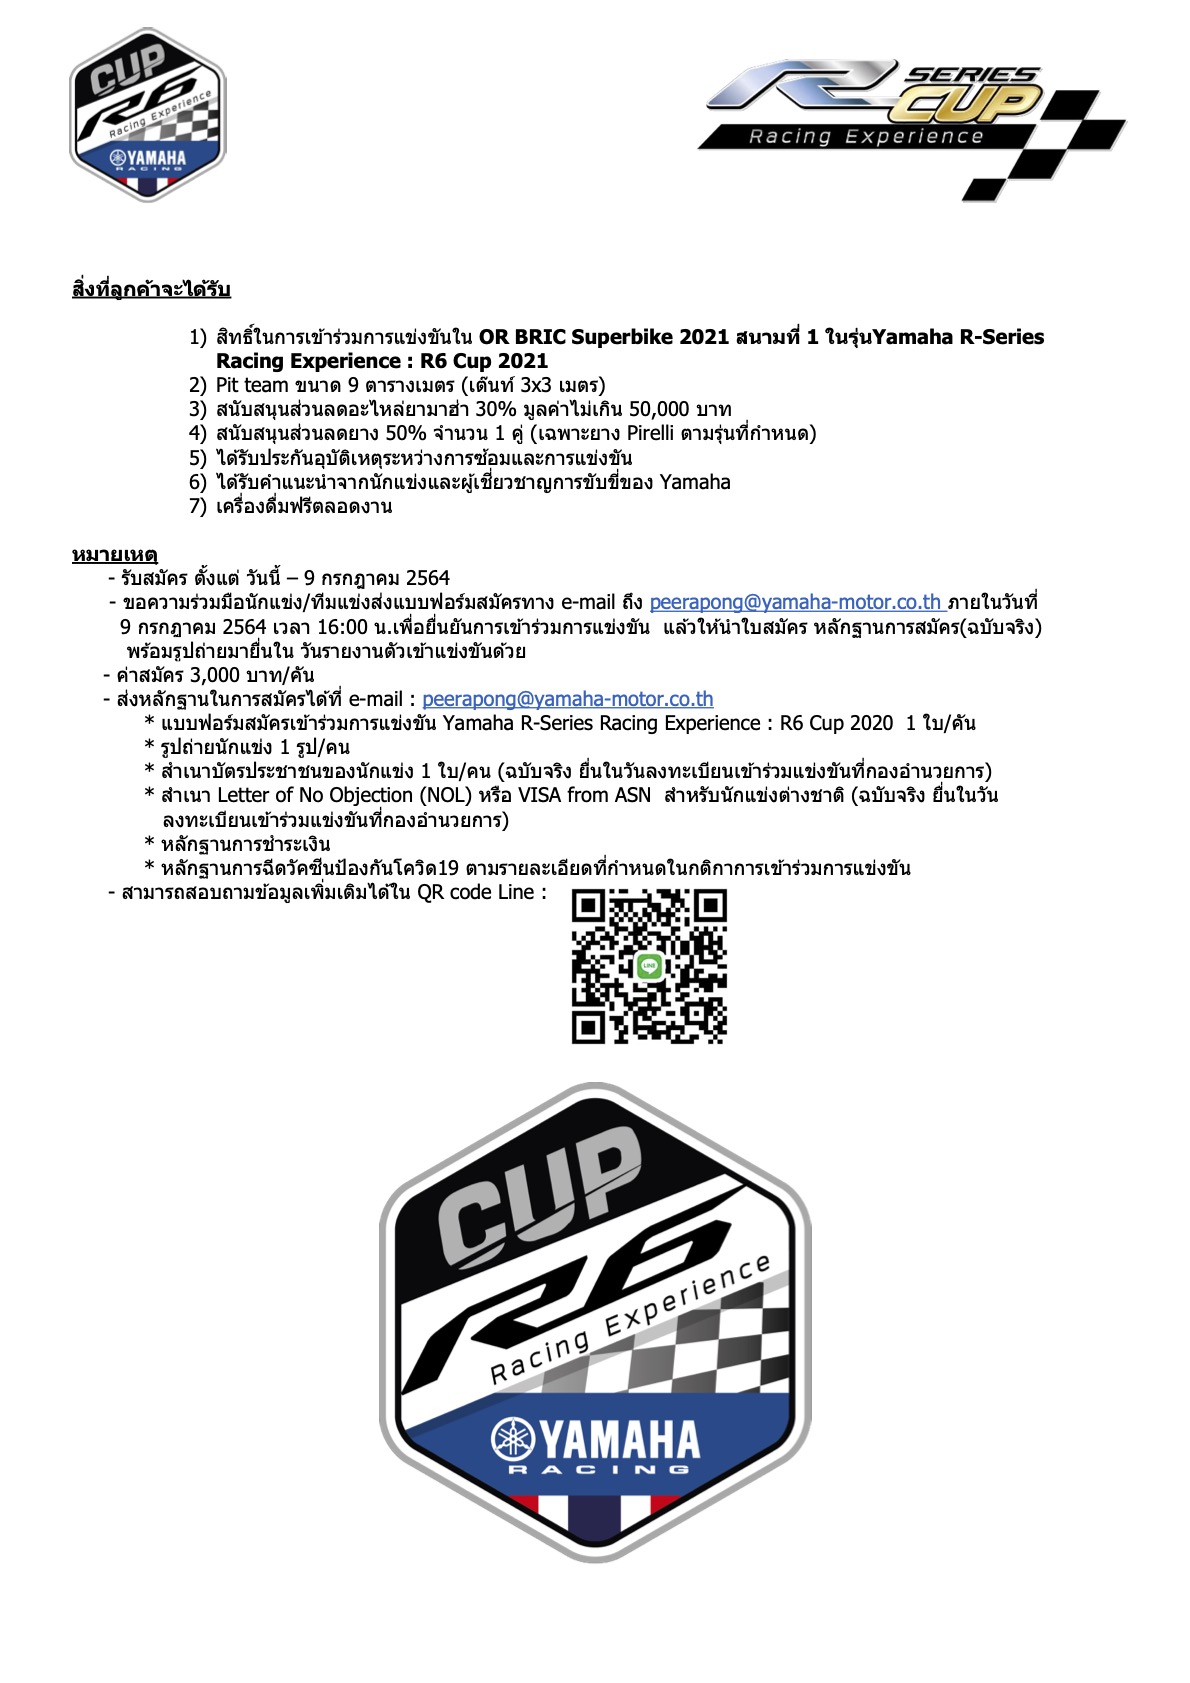 New 2 Entry form Yamaha R6 Cup 2021_v.3 copy 2